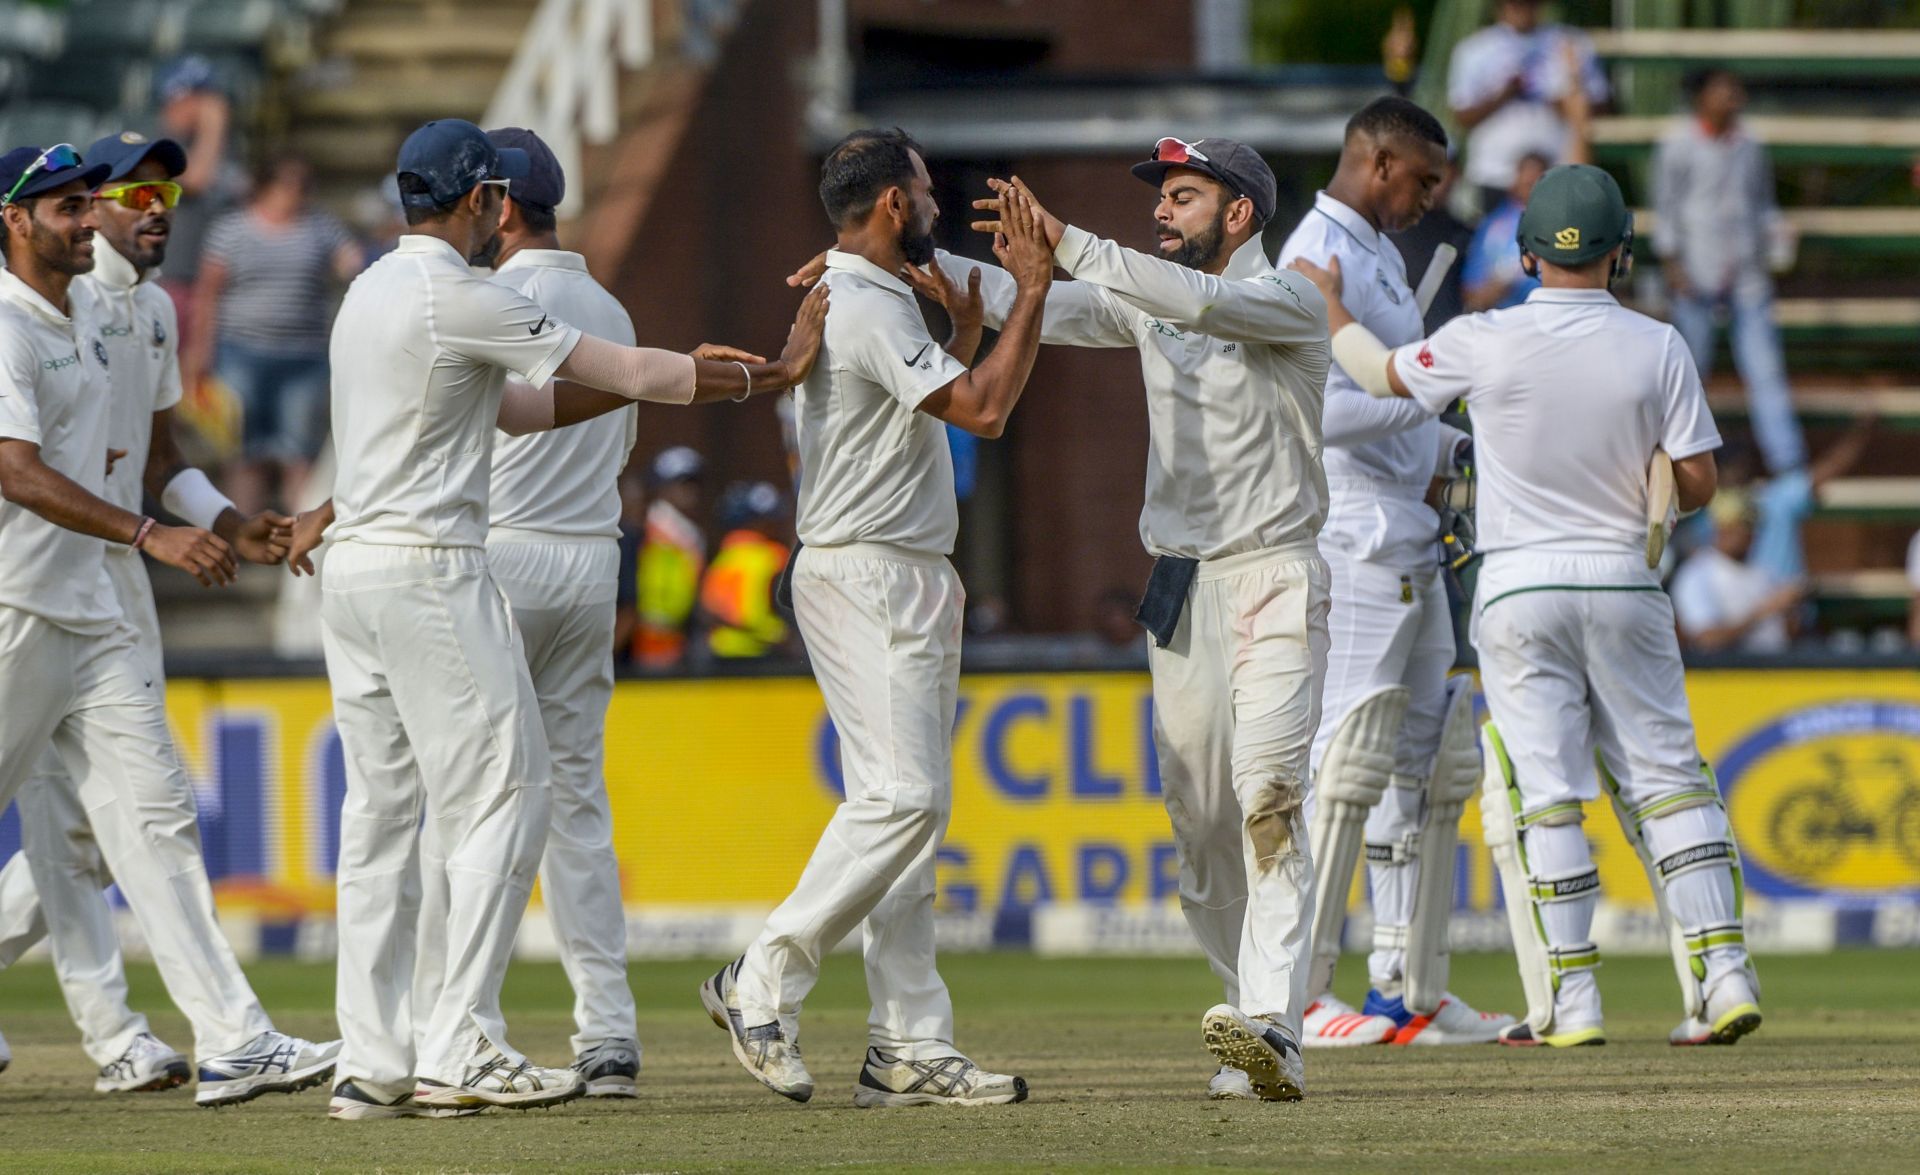 Virat Kohli led Team India to a Test win in Johannesburg in 2018